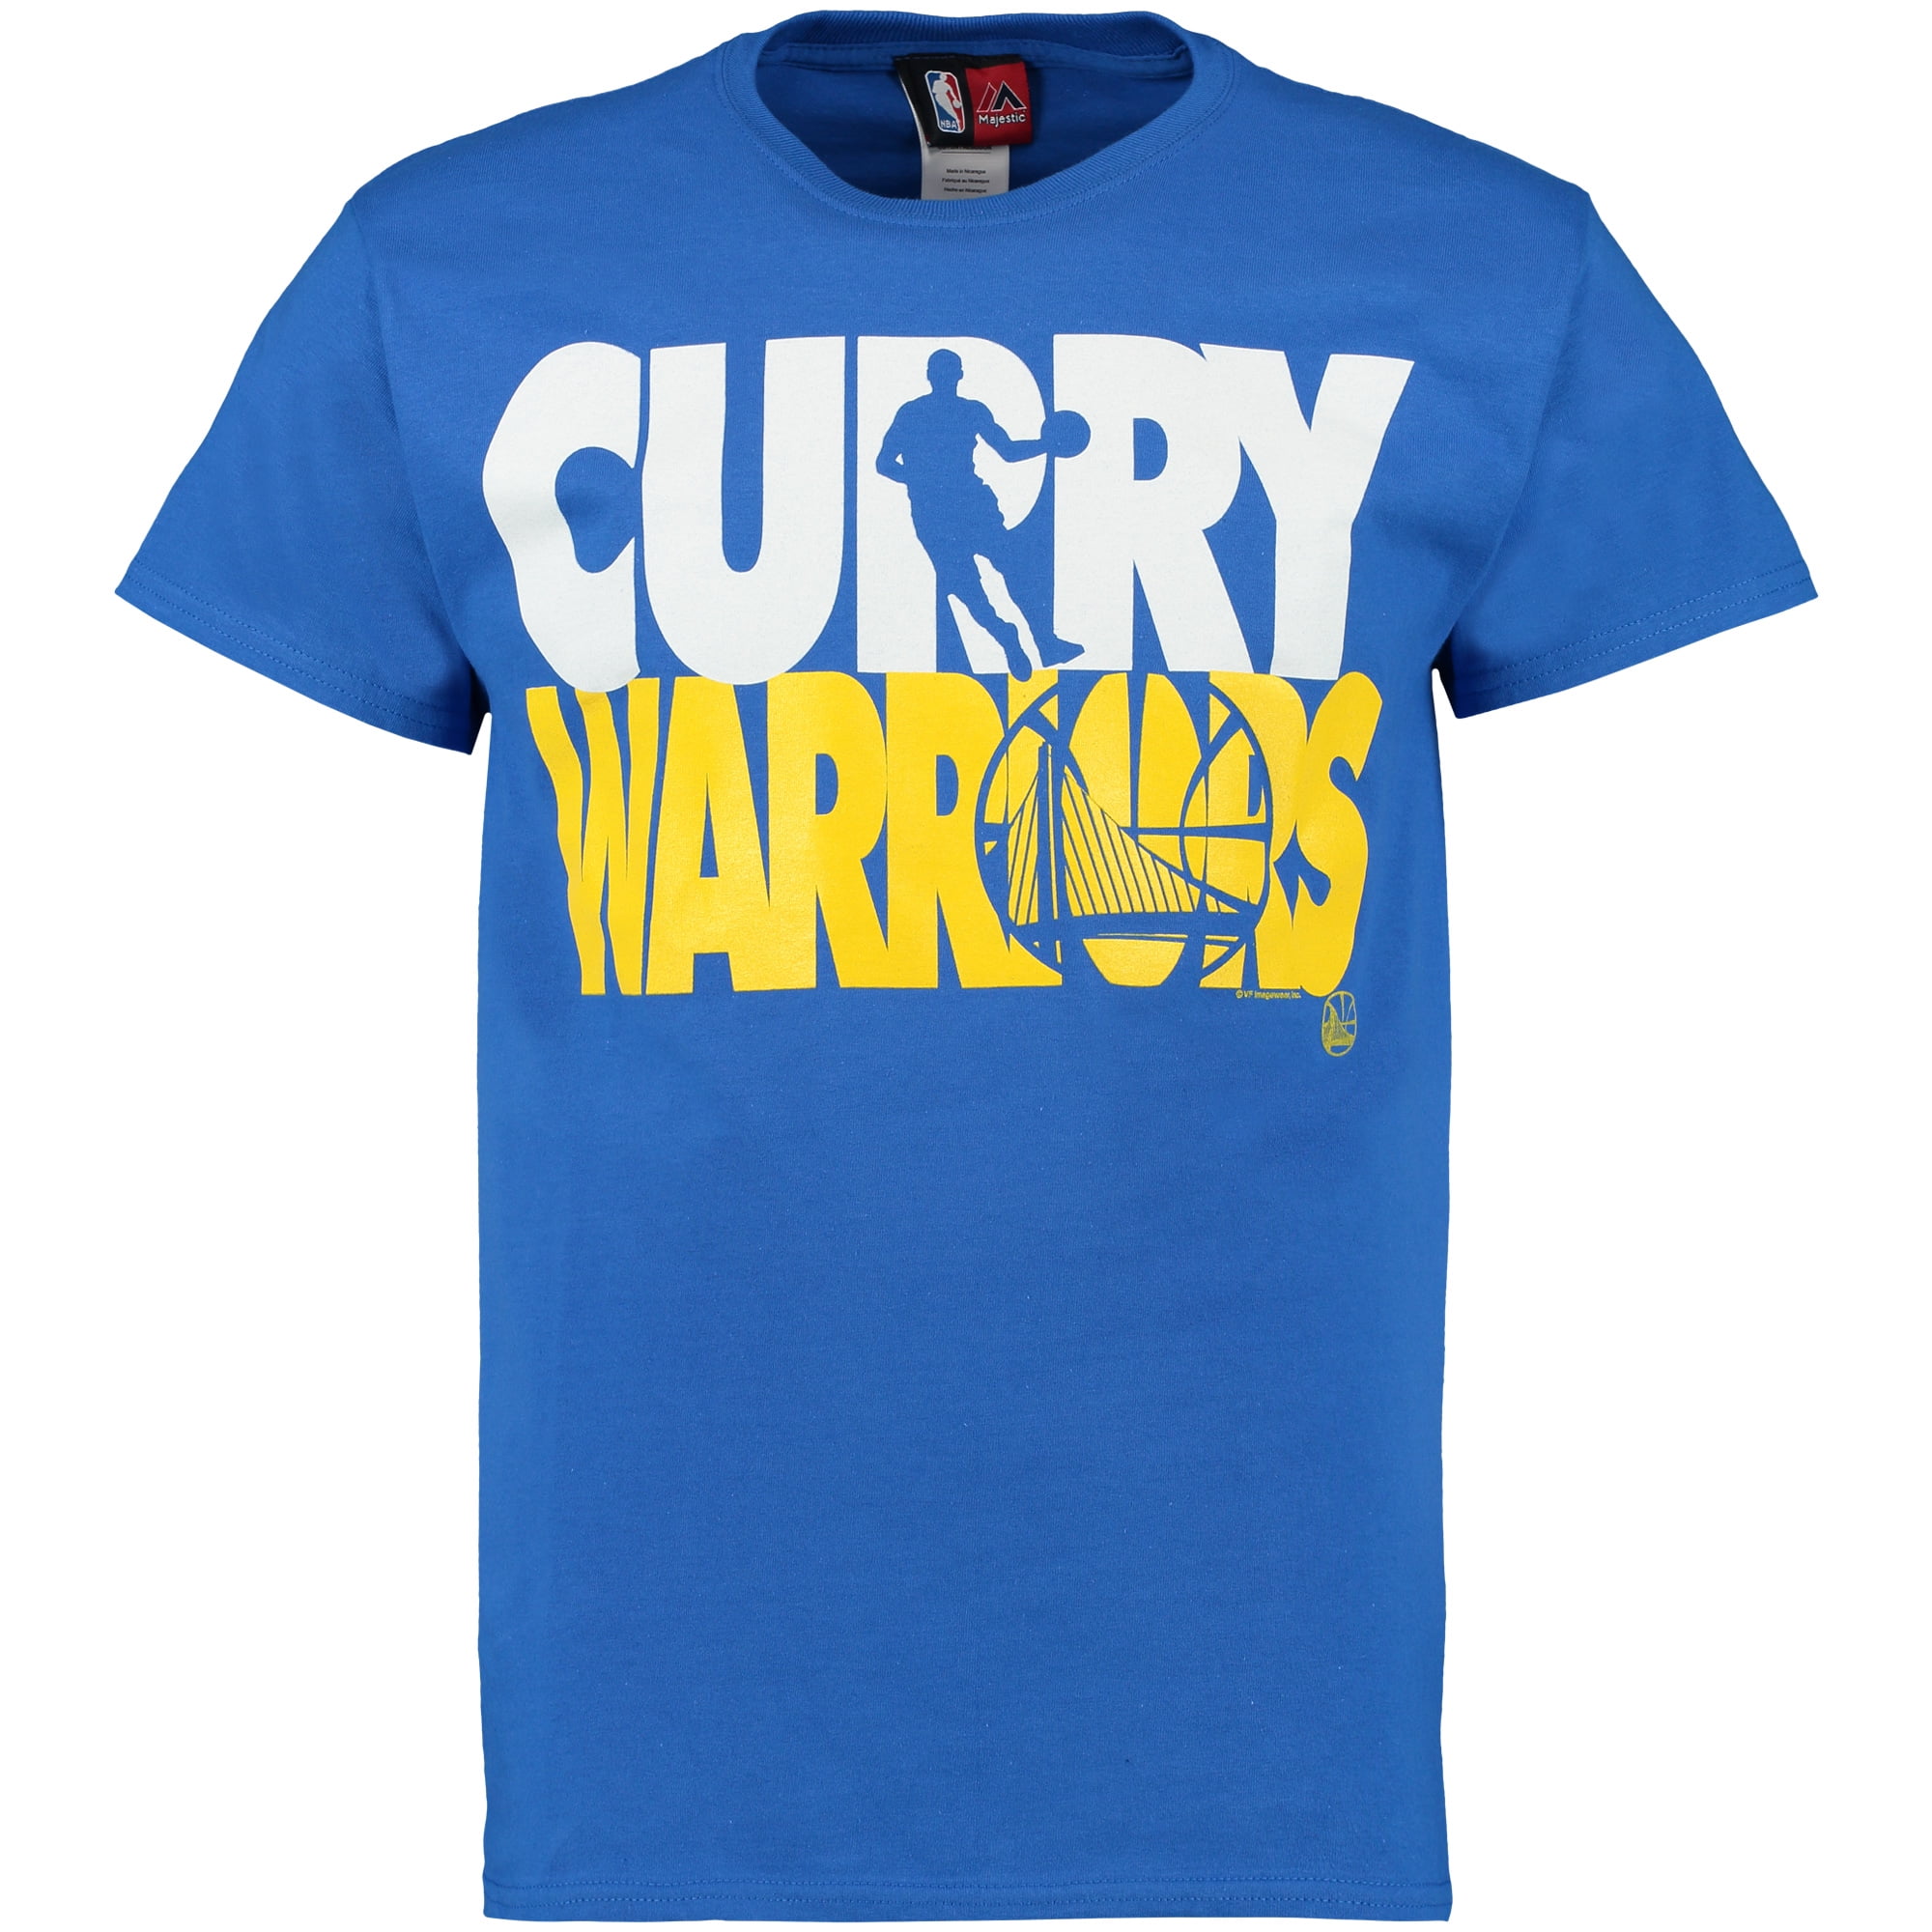 t shirt stephen curry